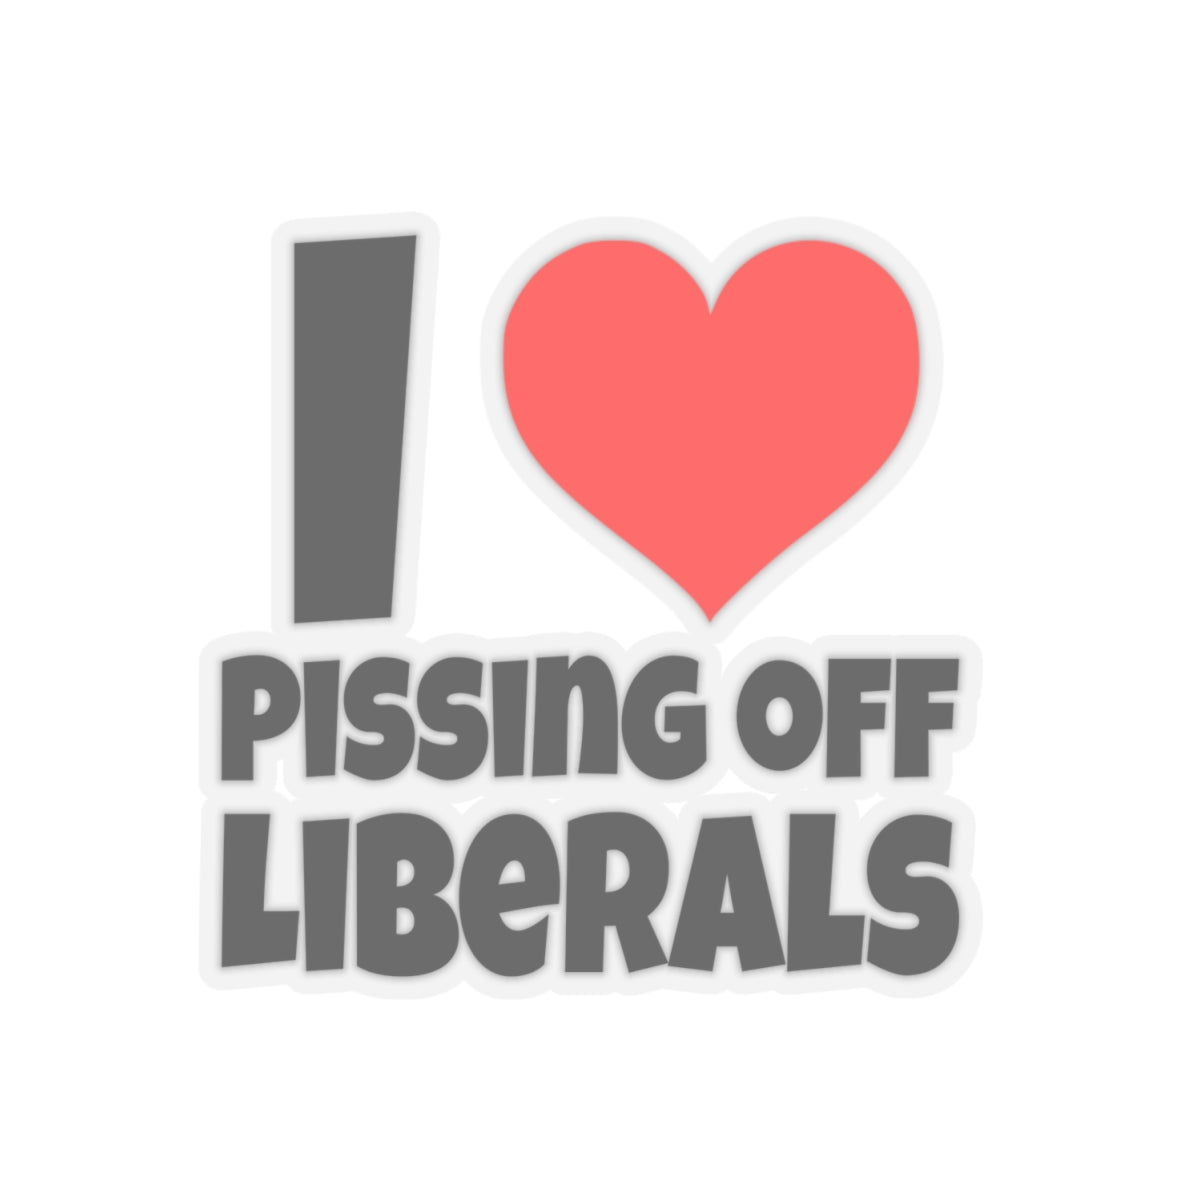 I Love Pissing Off Liberals - Kiss-Cut Stickers